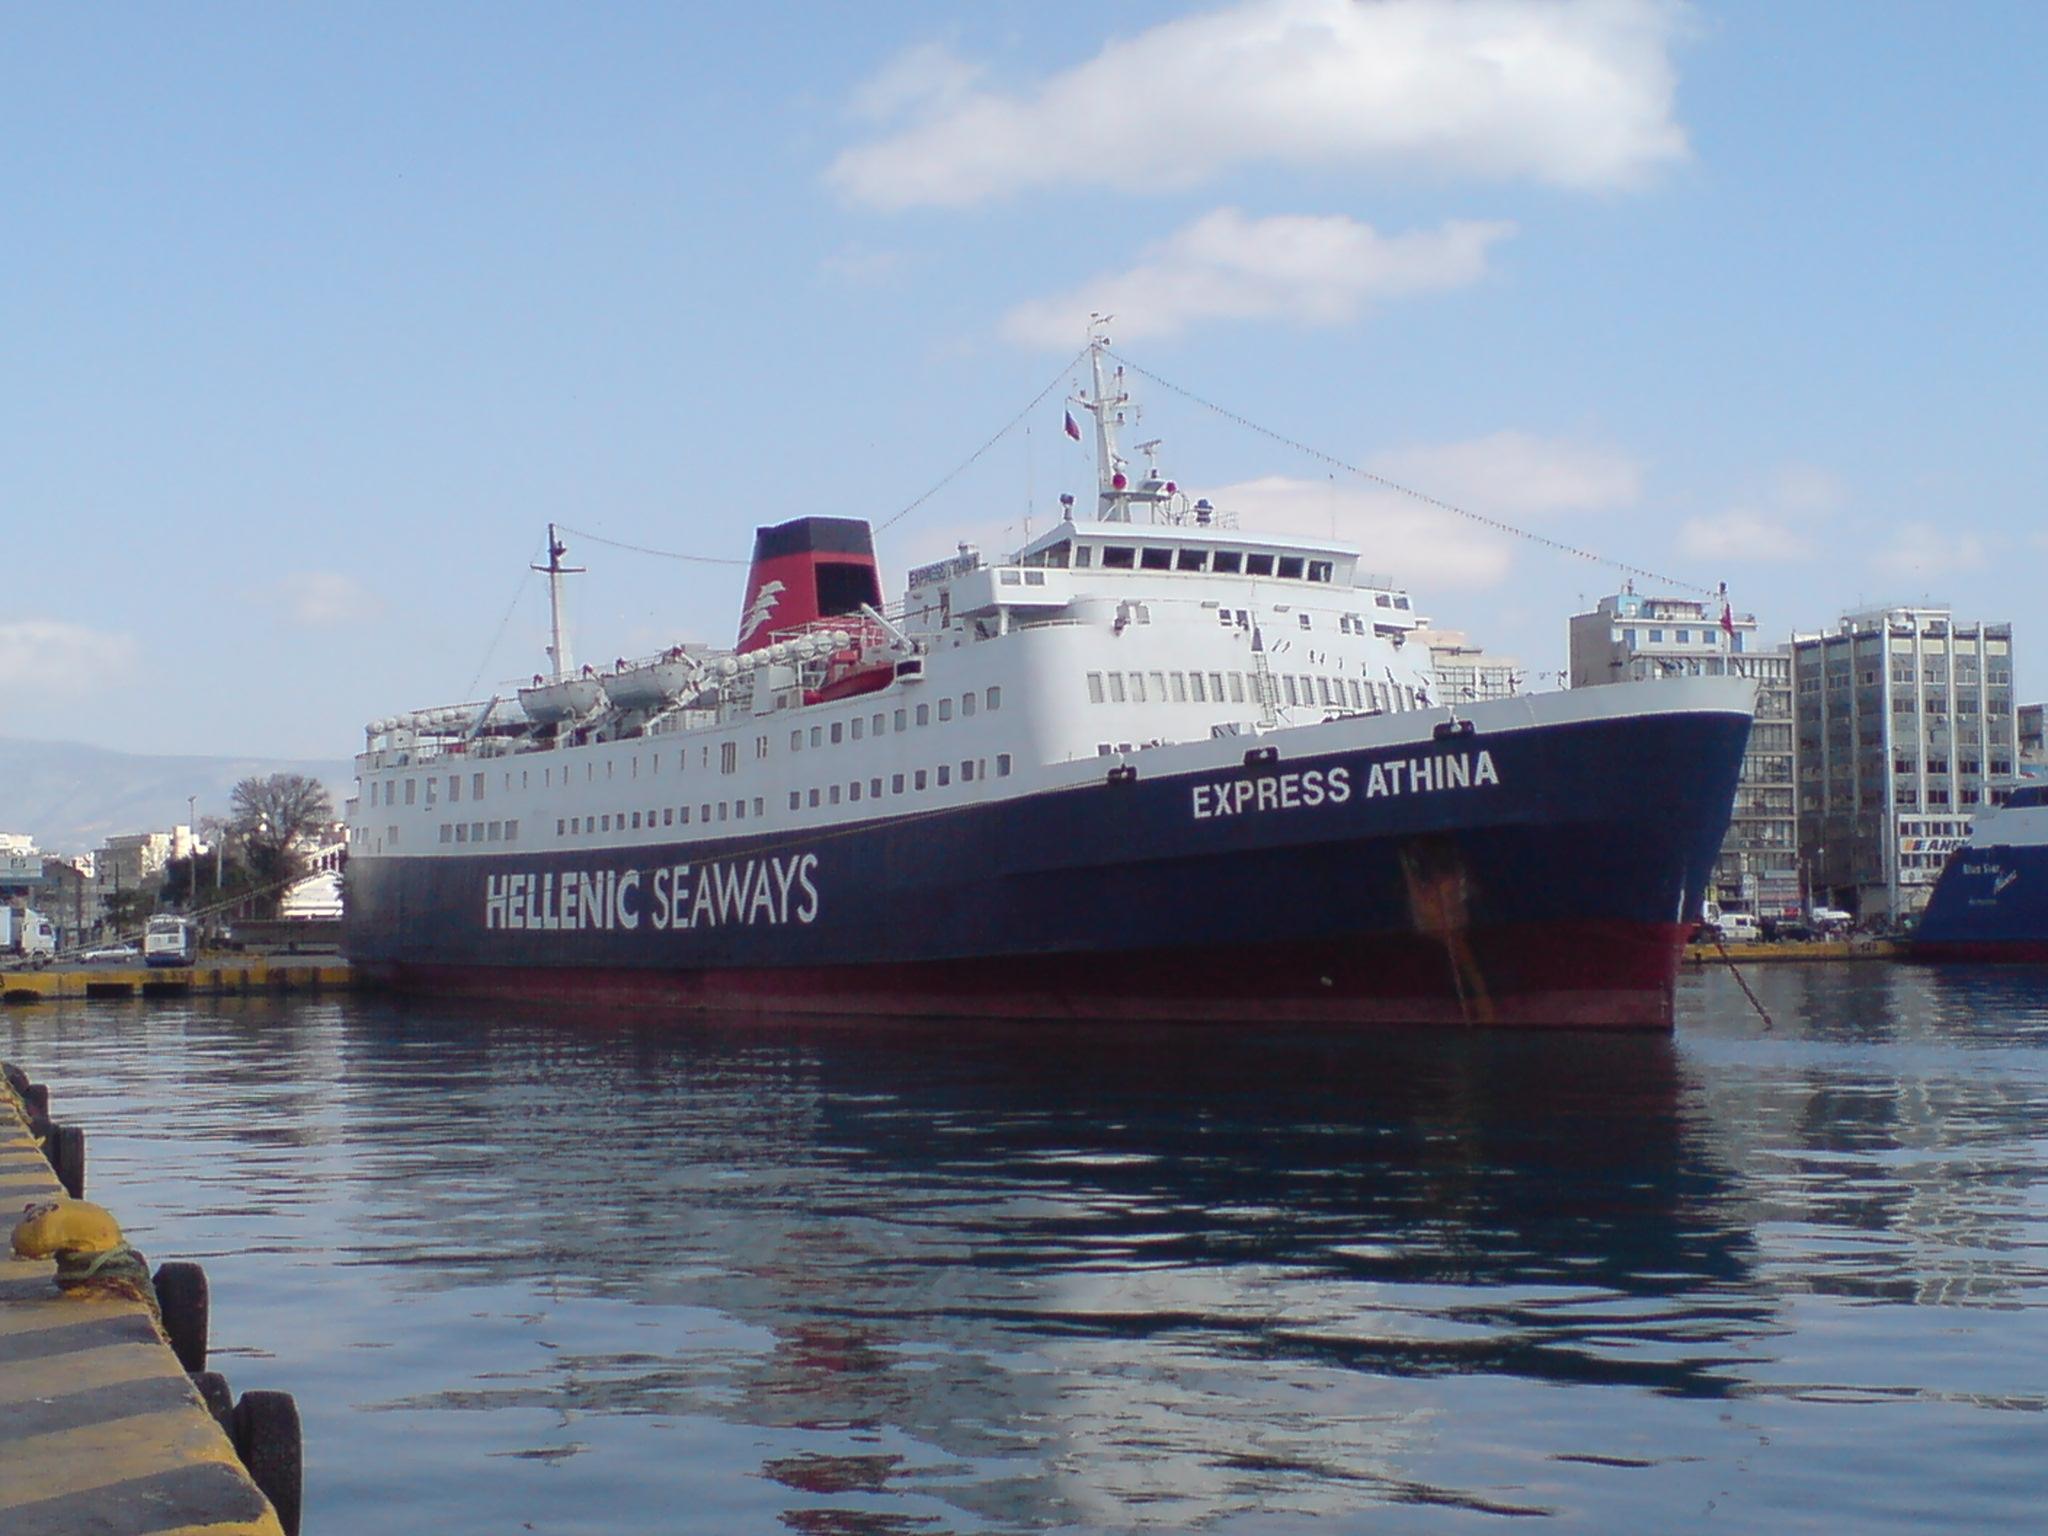 exprees athina at piraeus port